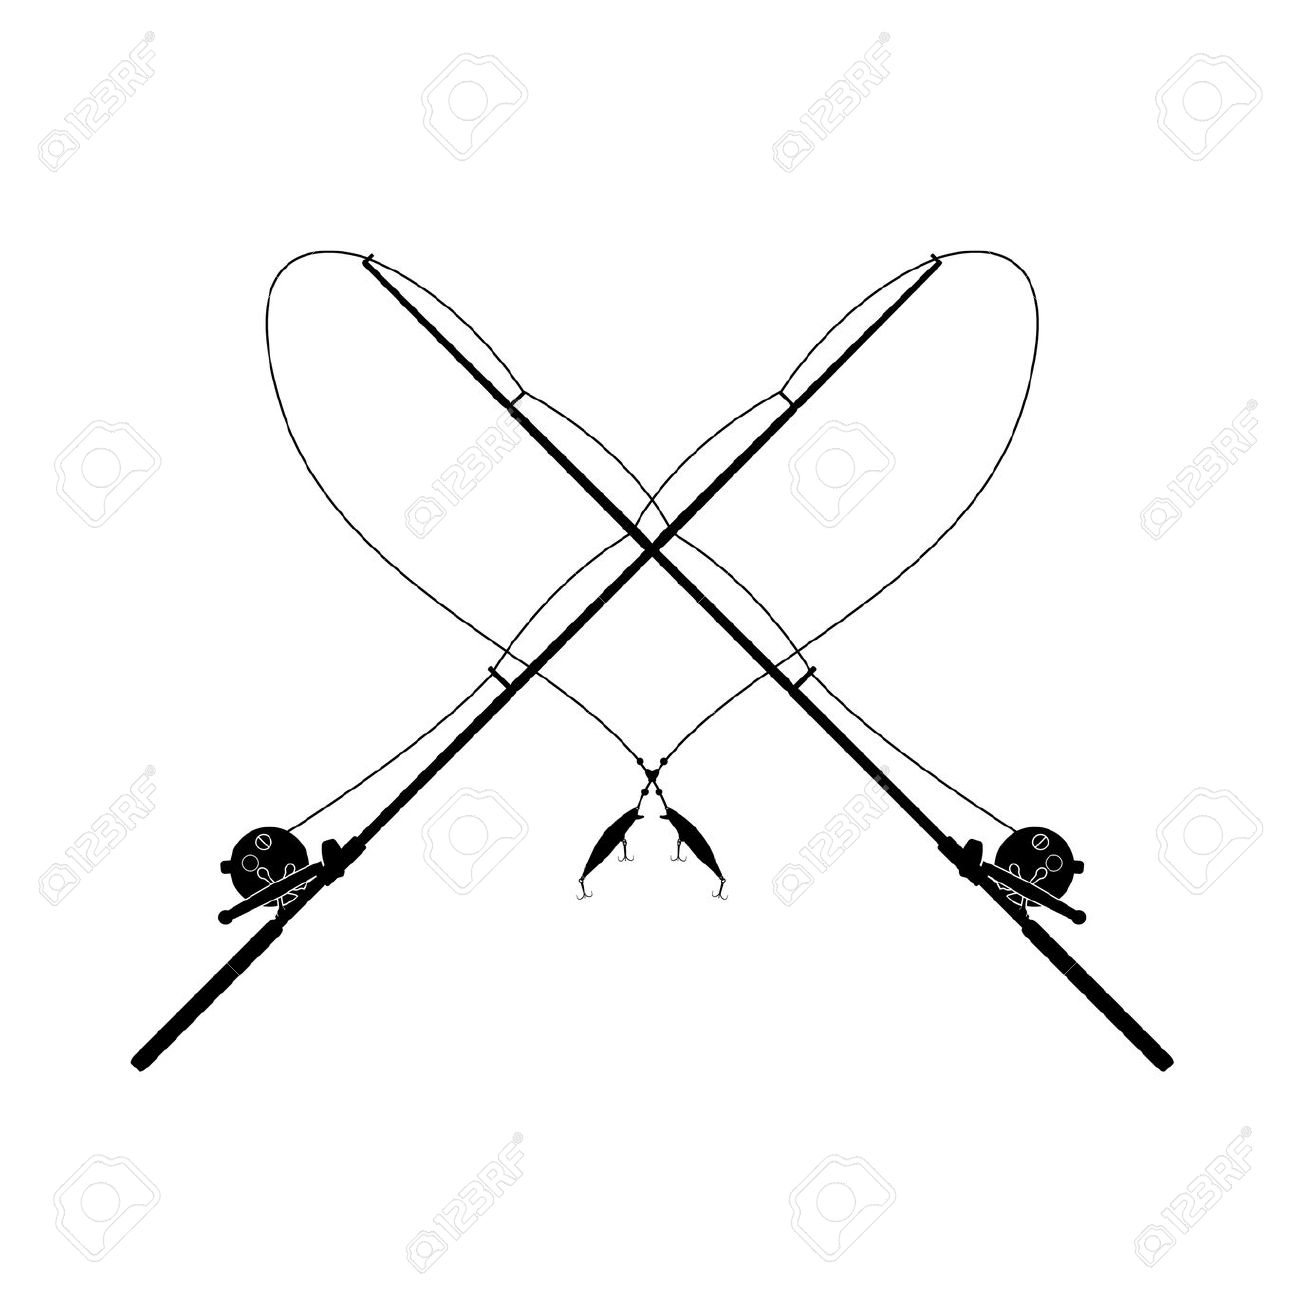 Simple Fishing Pole Drawing